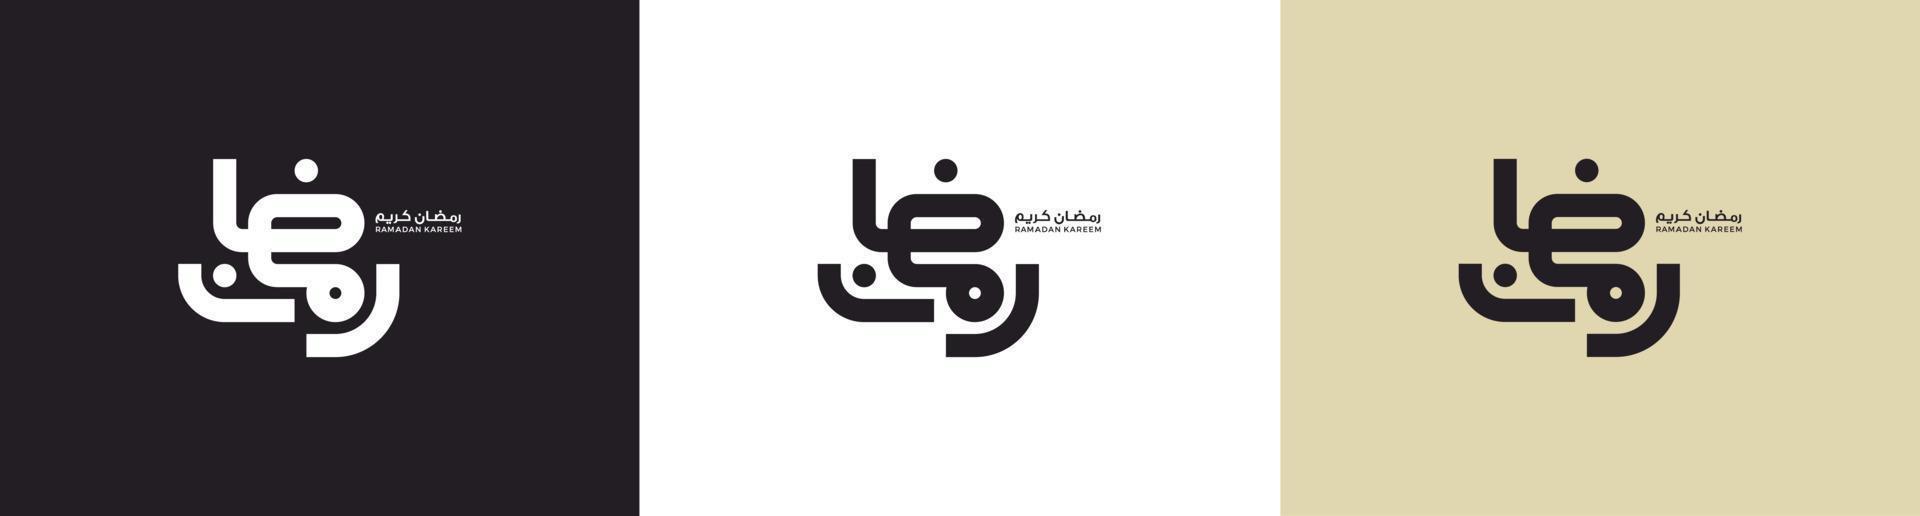 Ramadan Karim. ramadhan moubarak. traduit content, saint Ramadan. mois de jeûne pour les musulmans. arabe typographie. vecteur